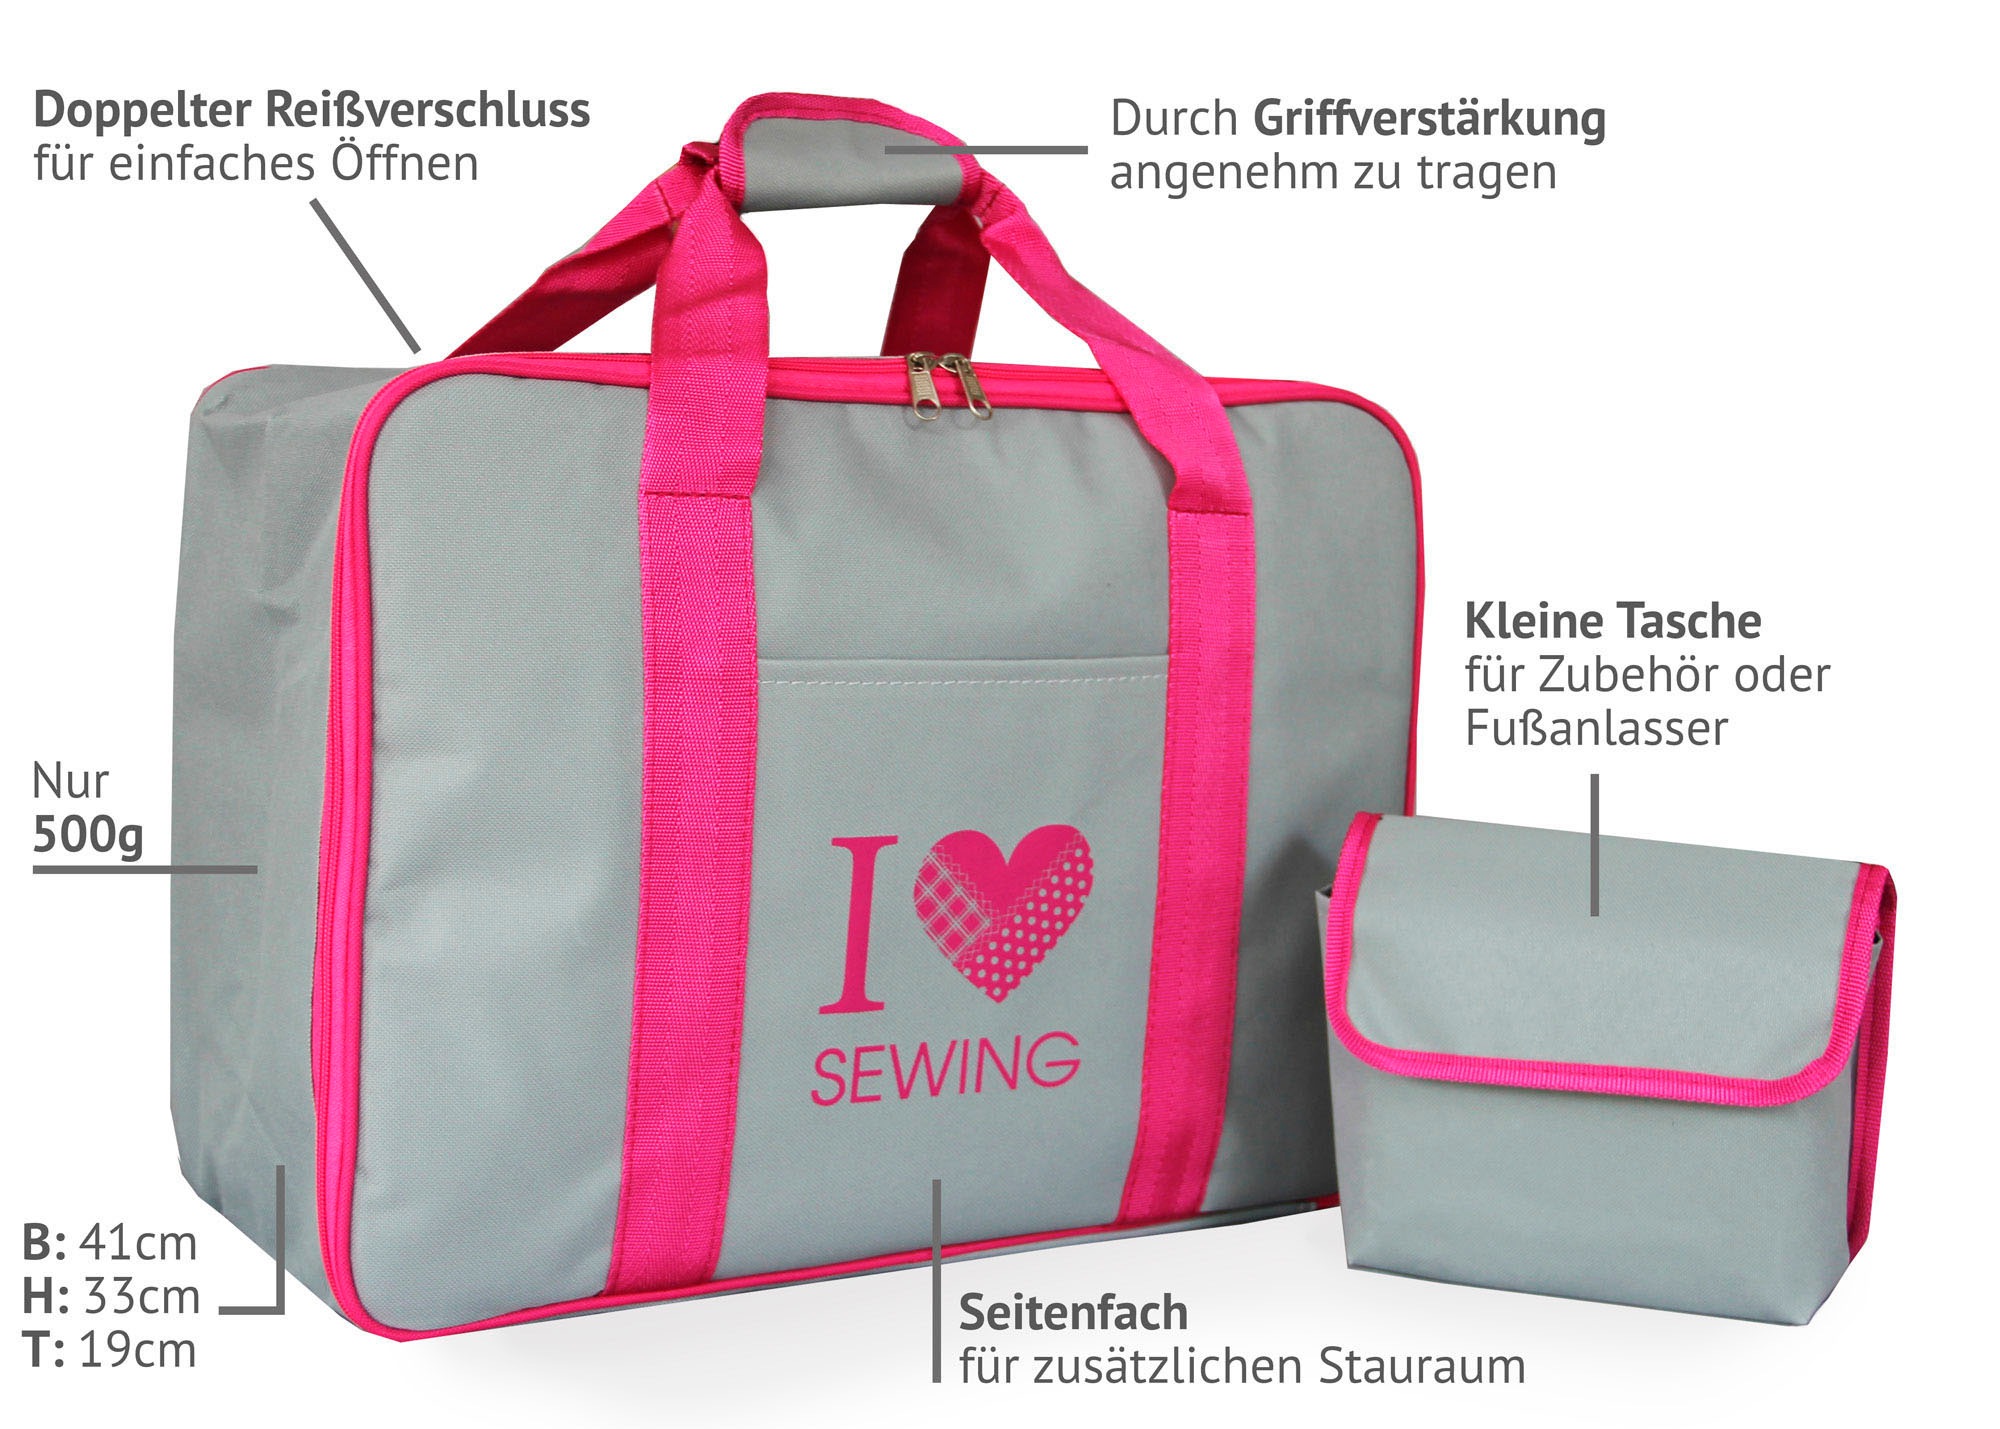 Gratis kaufen - Nähmaschinentasche mit I »Sarah Veritas Veritas love sewing«, Programme, Freiarm-Nähmaschine 13